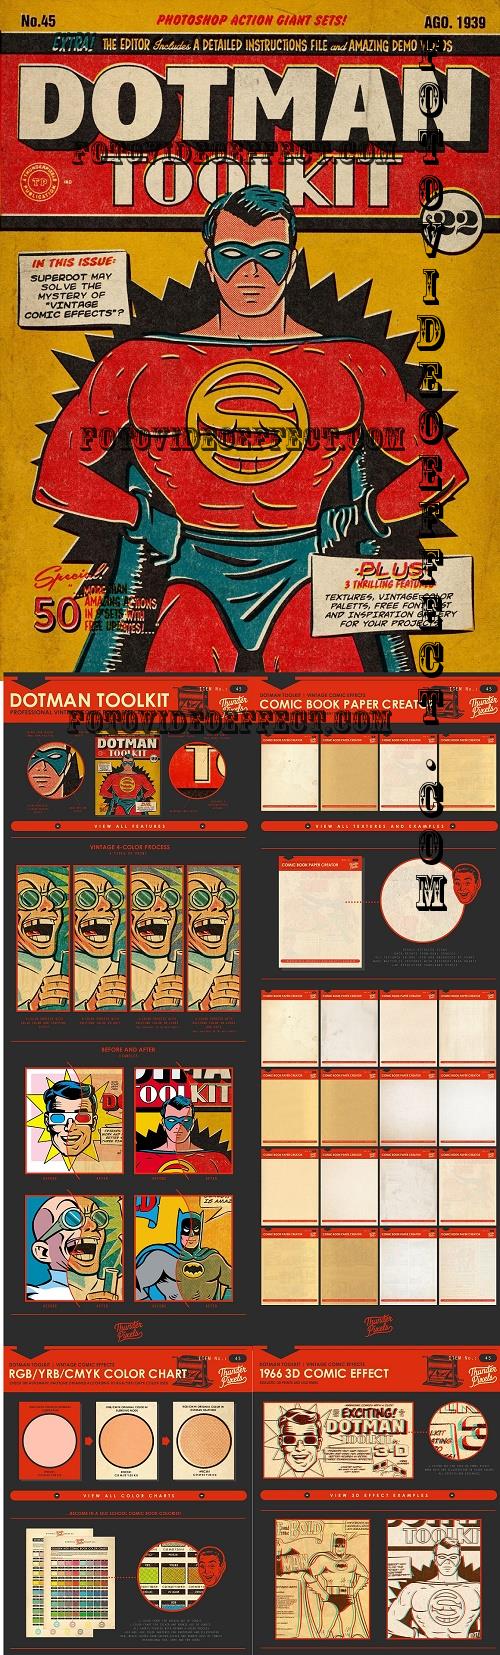 DotMan ToolKit Vintage Comic Effects - 10216652